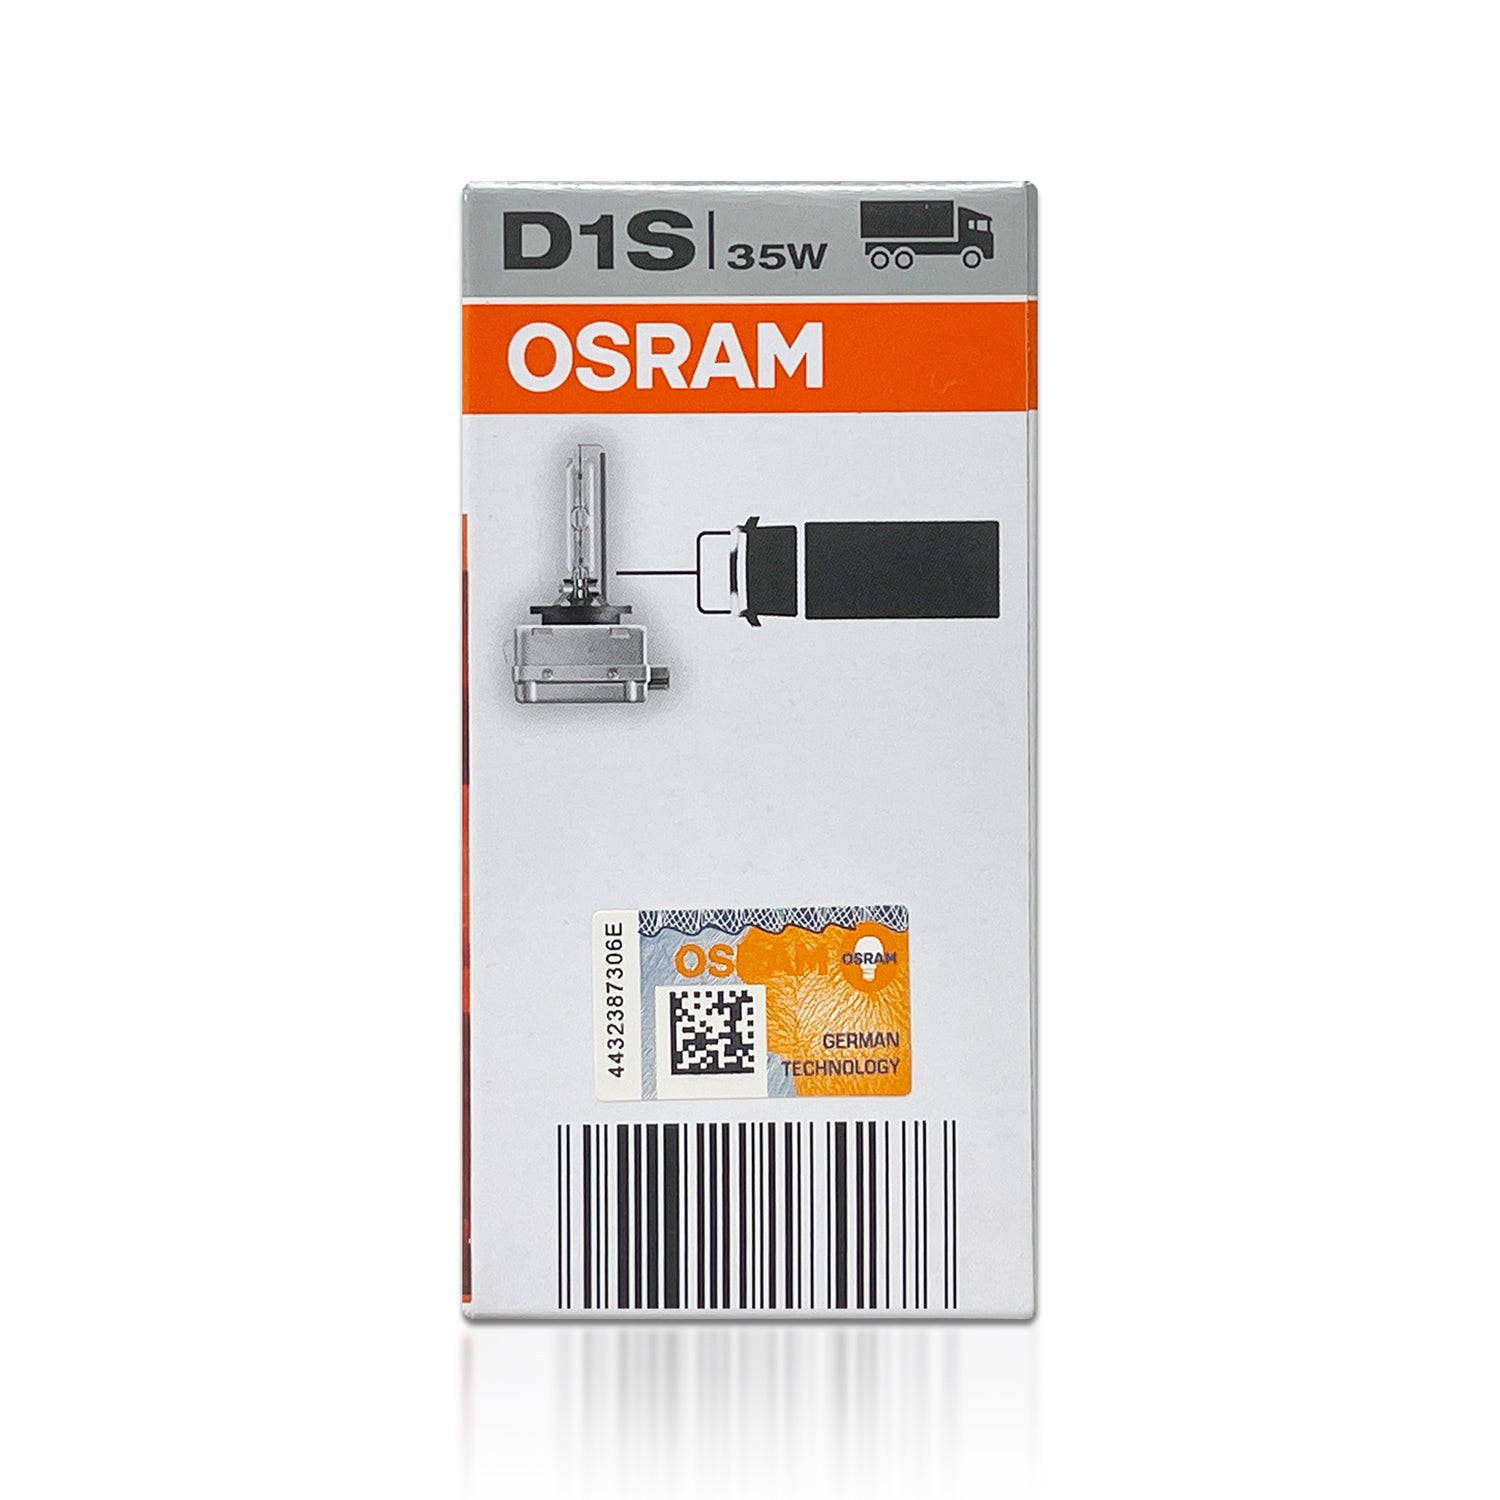 OSRAM D1S HID Kit System XenArc Xenaelectron 66144 35XT6 - Asia Booth